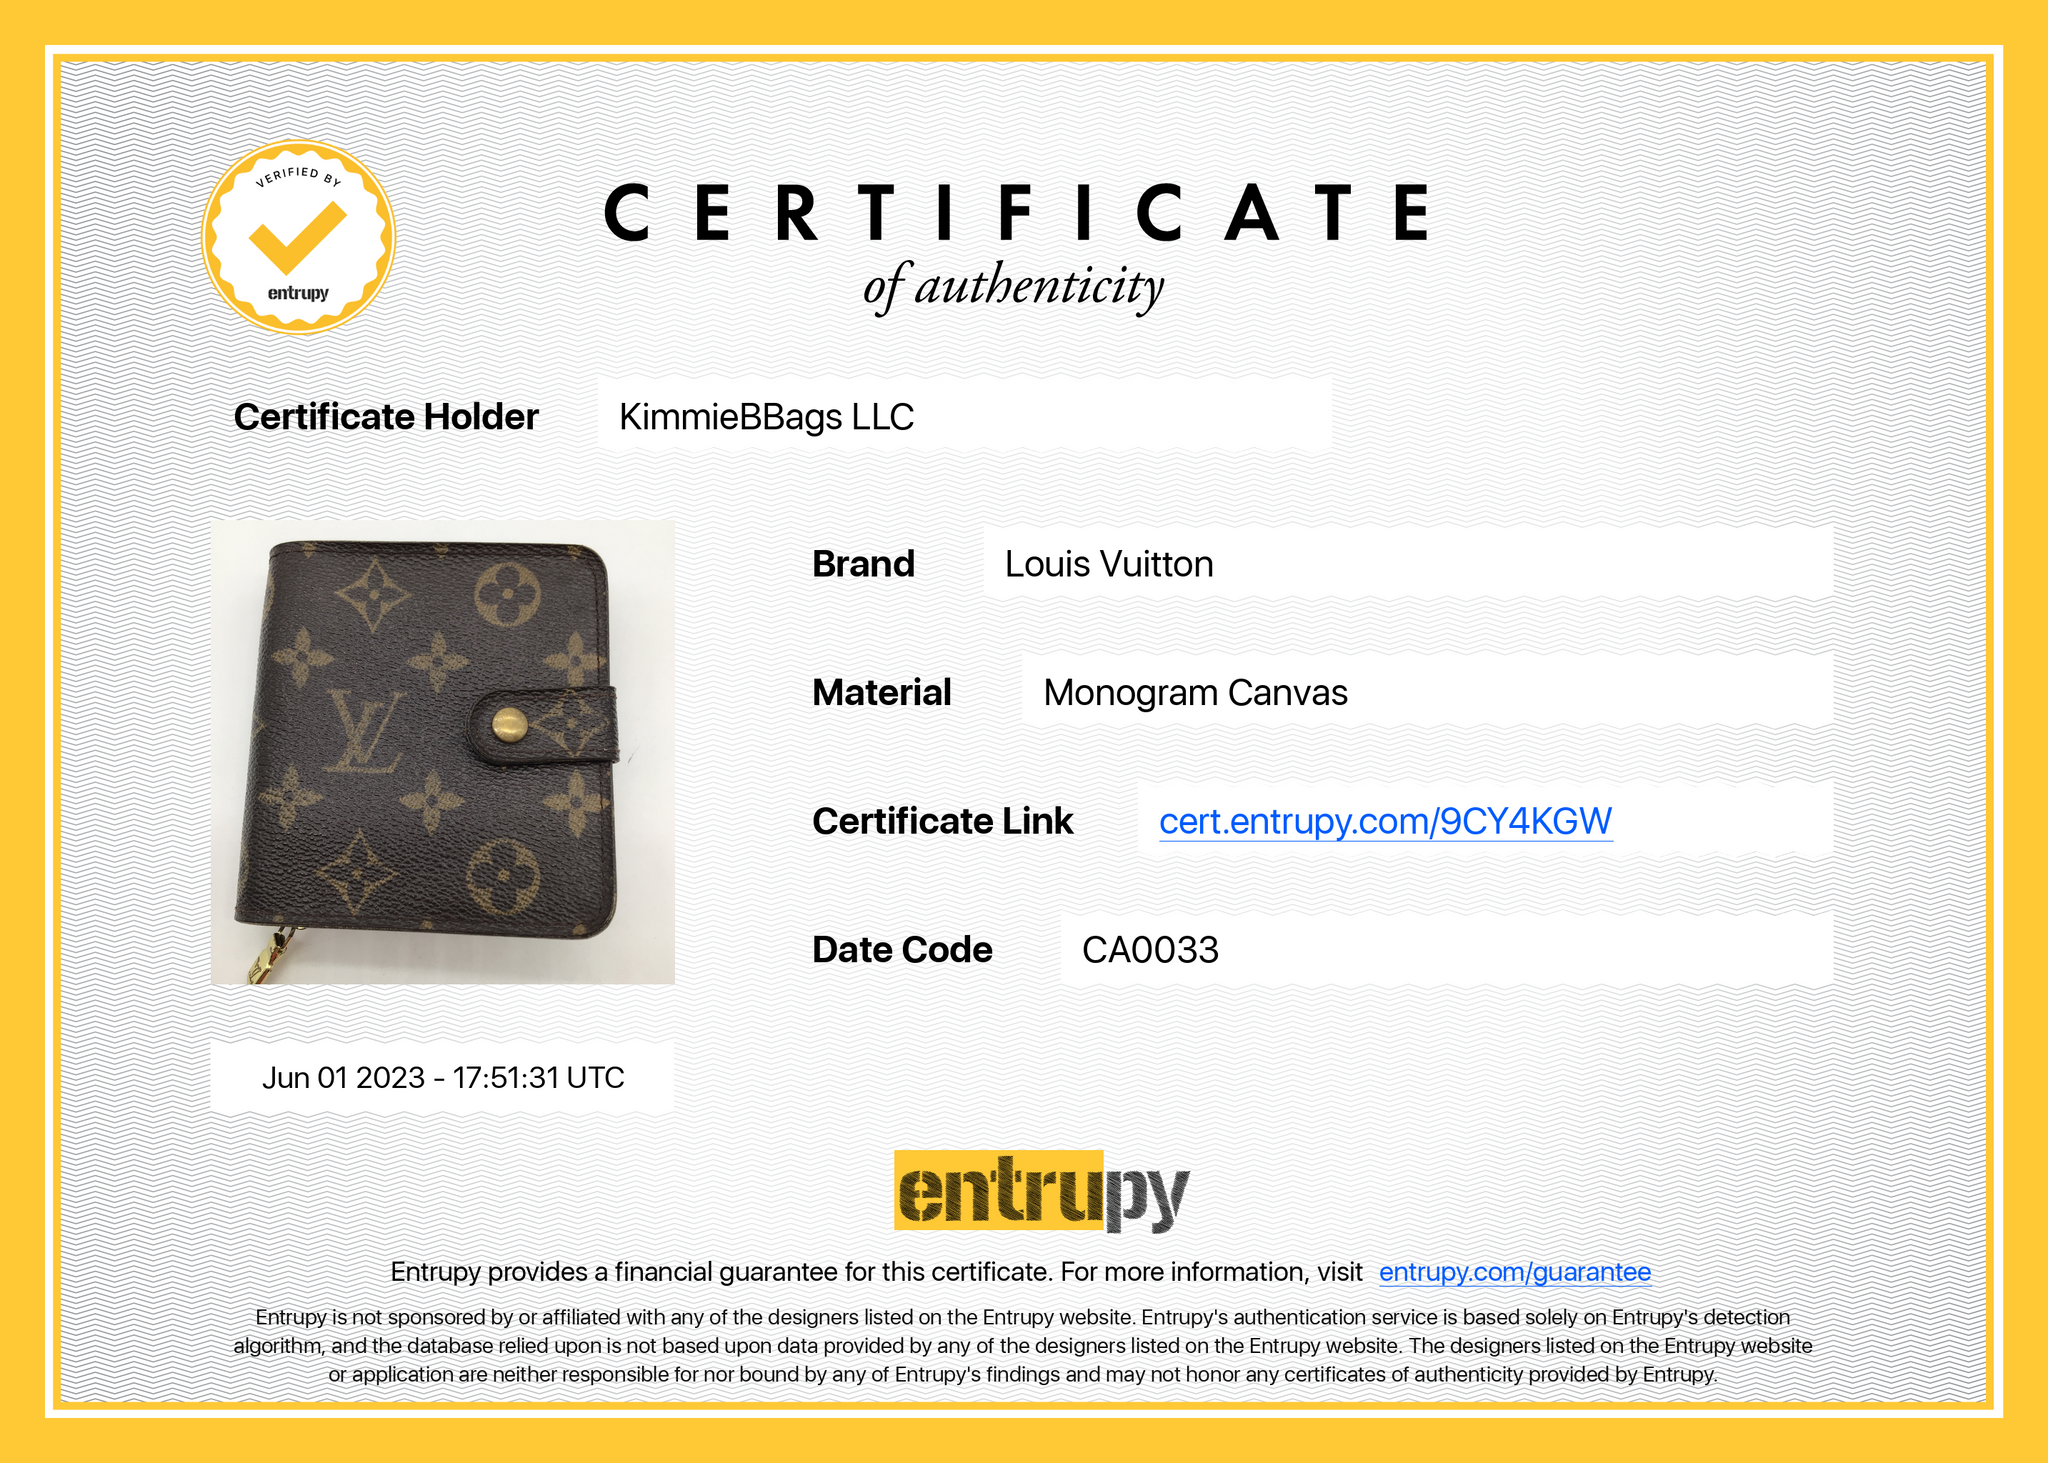 Authenticated Used Louis Vuitton Bifold Wallet Zip Brown Monogram M61667  CA0948 LOUIS VUITTON Unisex